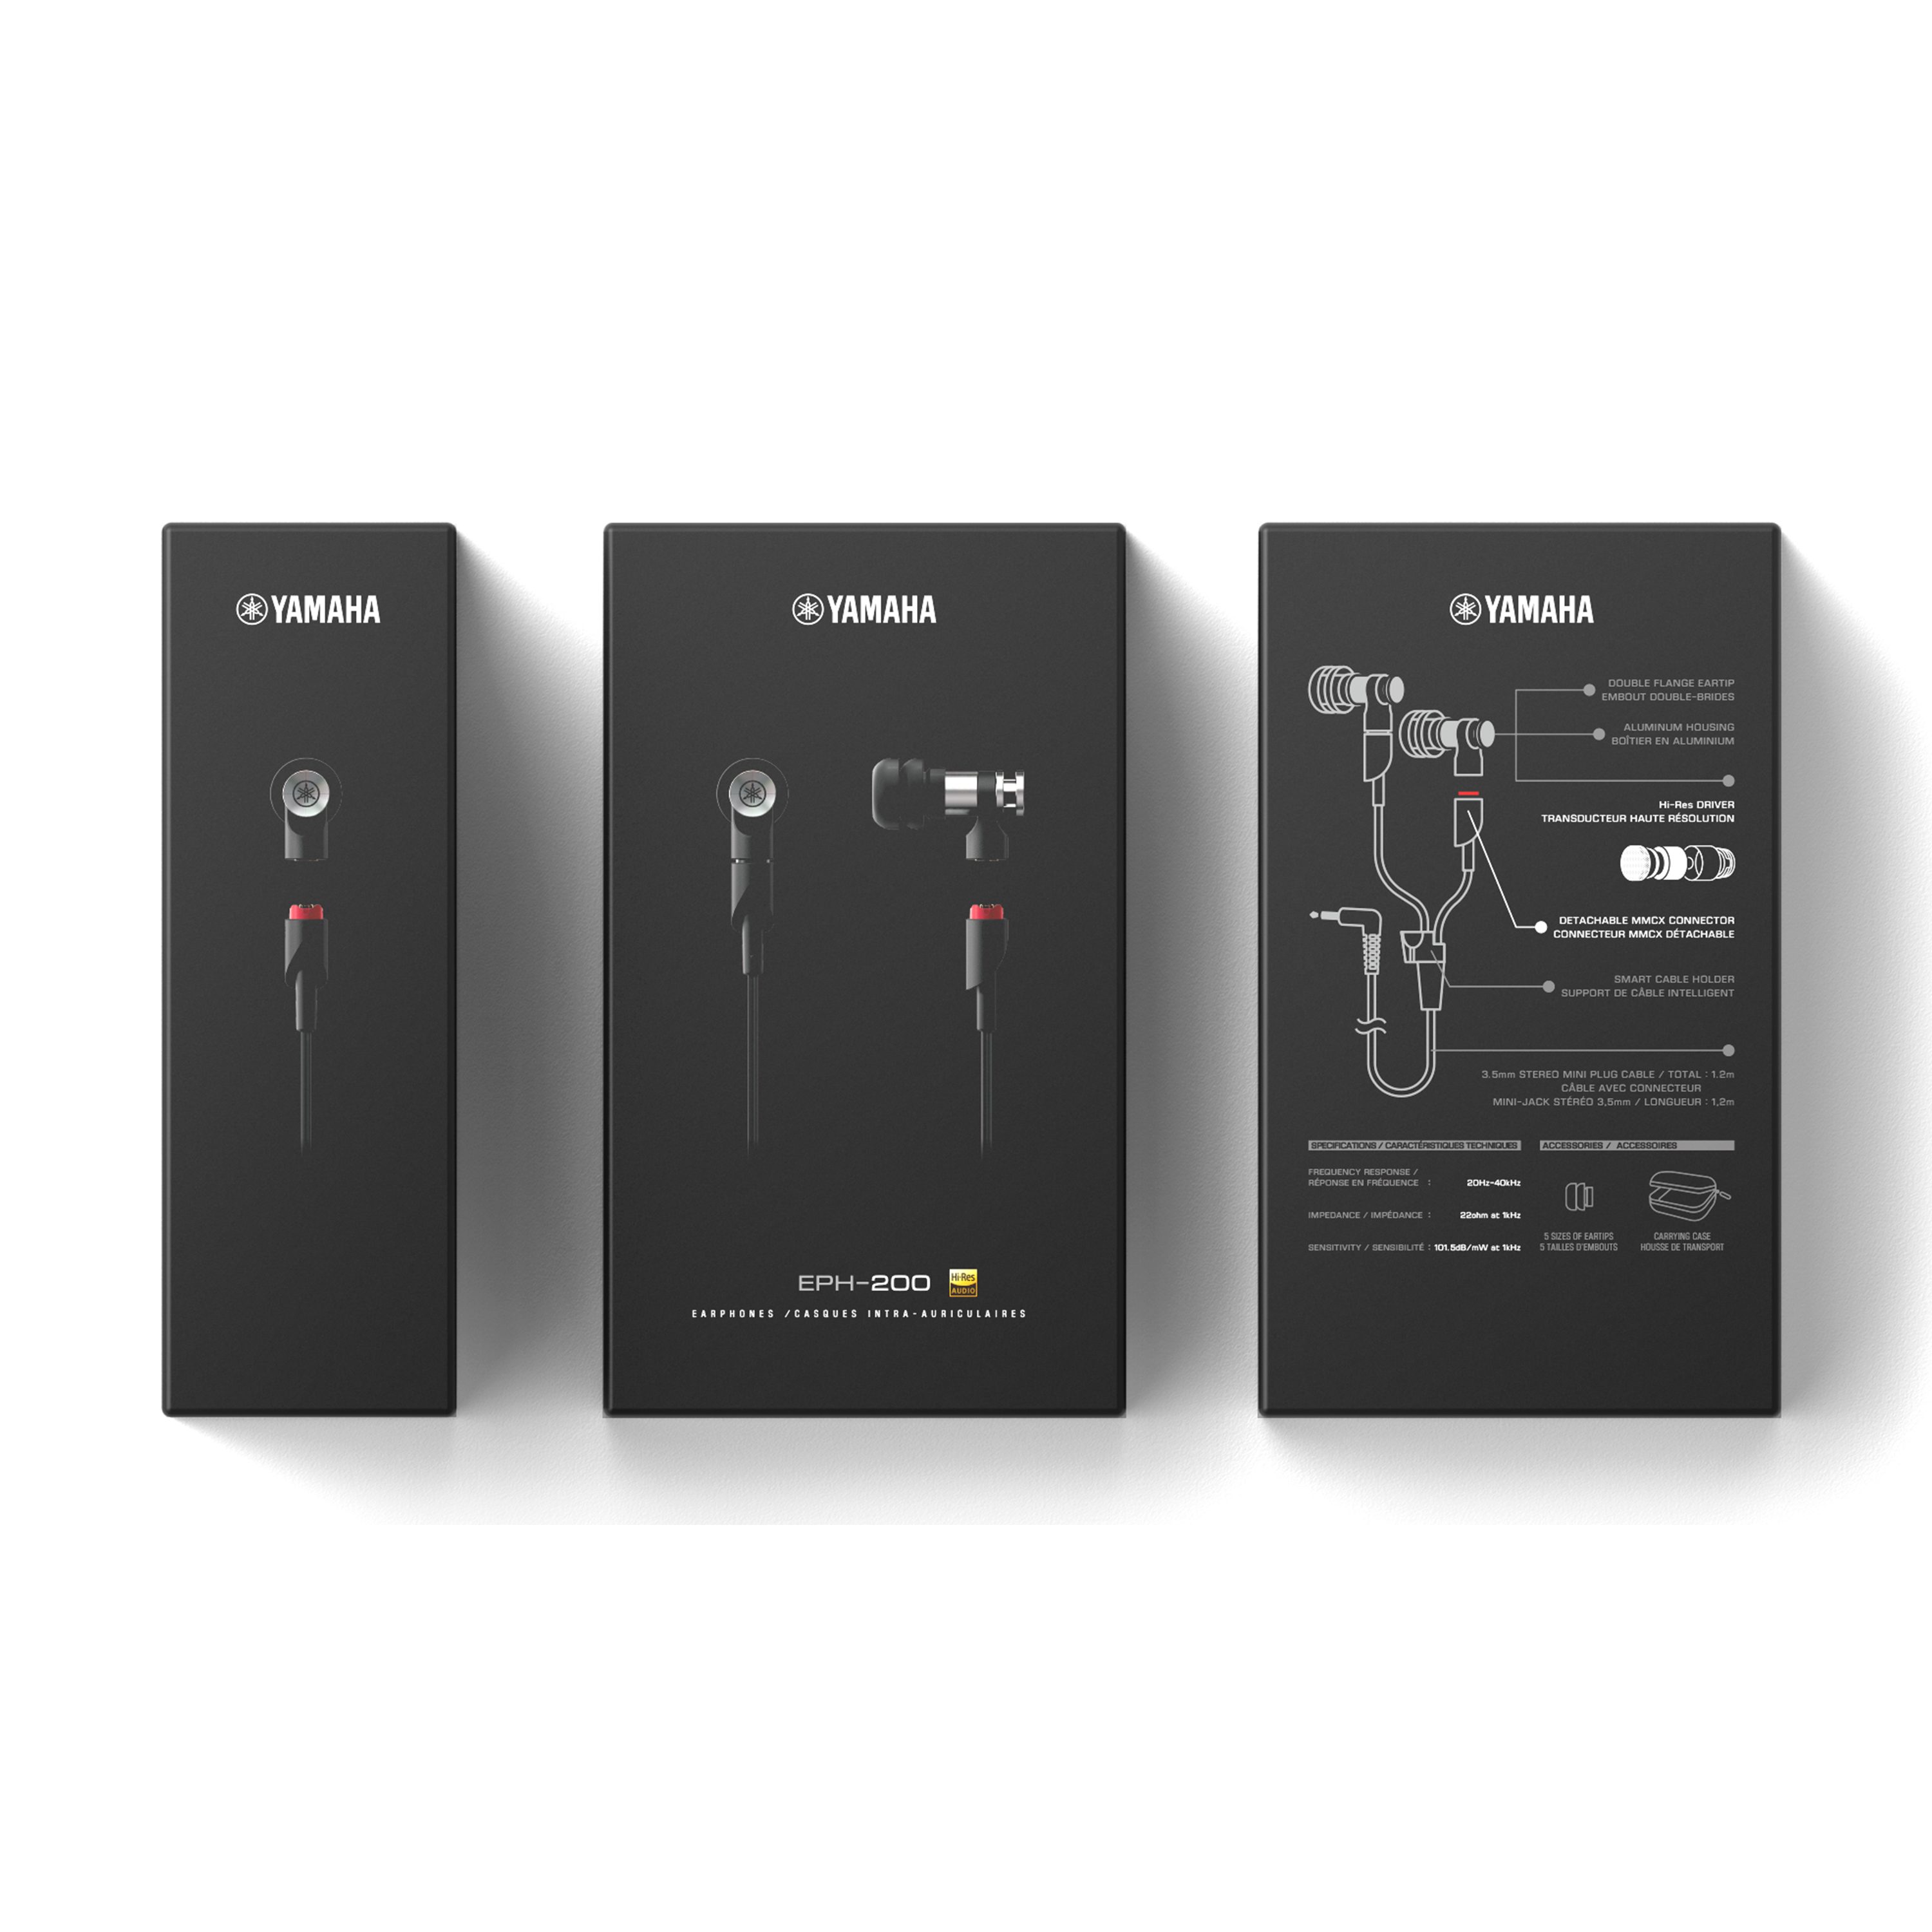 EPH-200 - Overview - Headphones & Earphones - Audio & Visual 